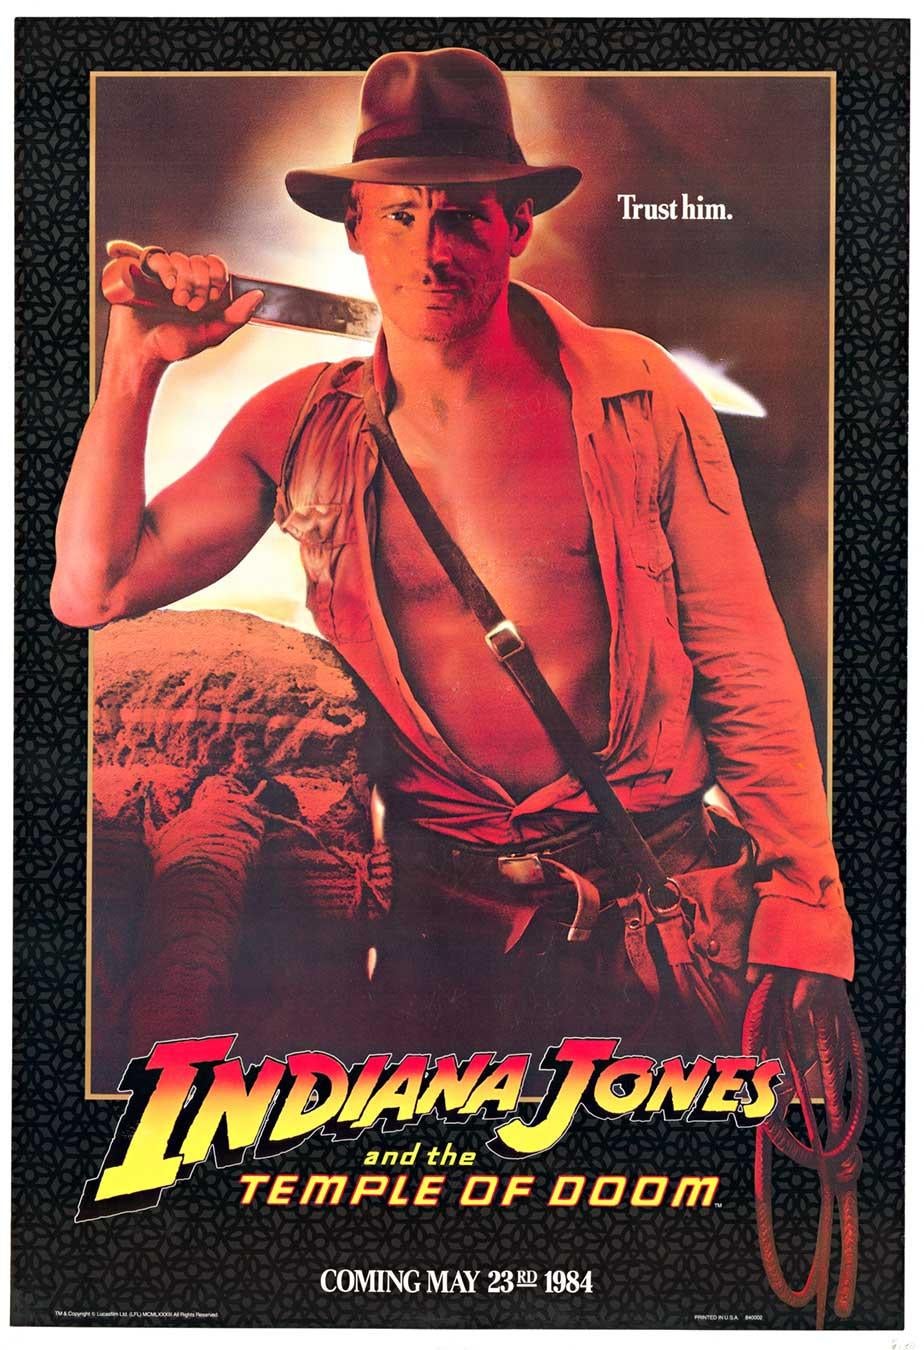 Spiros Angelikas Figurative Print - Original pre-release 'Indiana Jones and the Temple of Doom' vintage poster